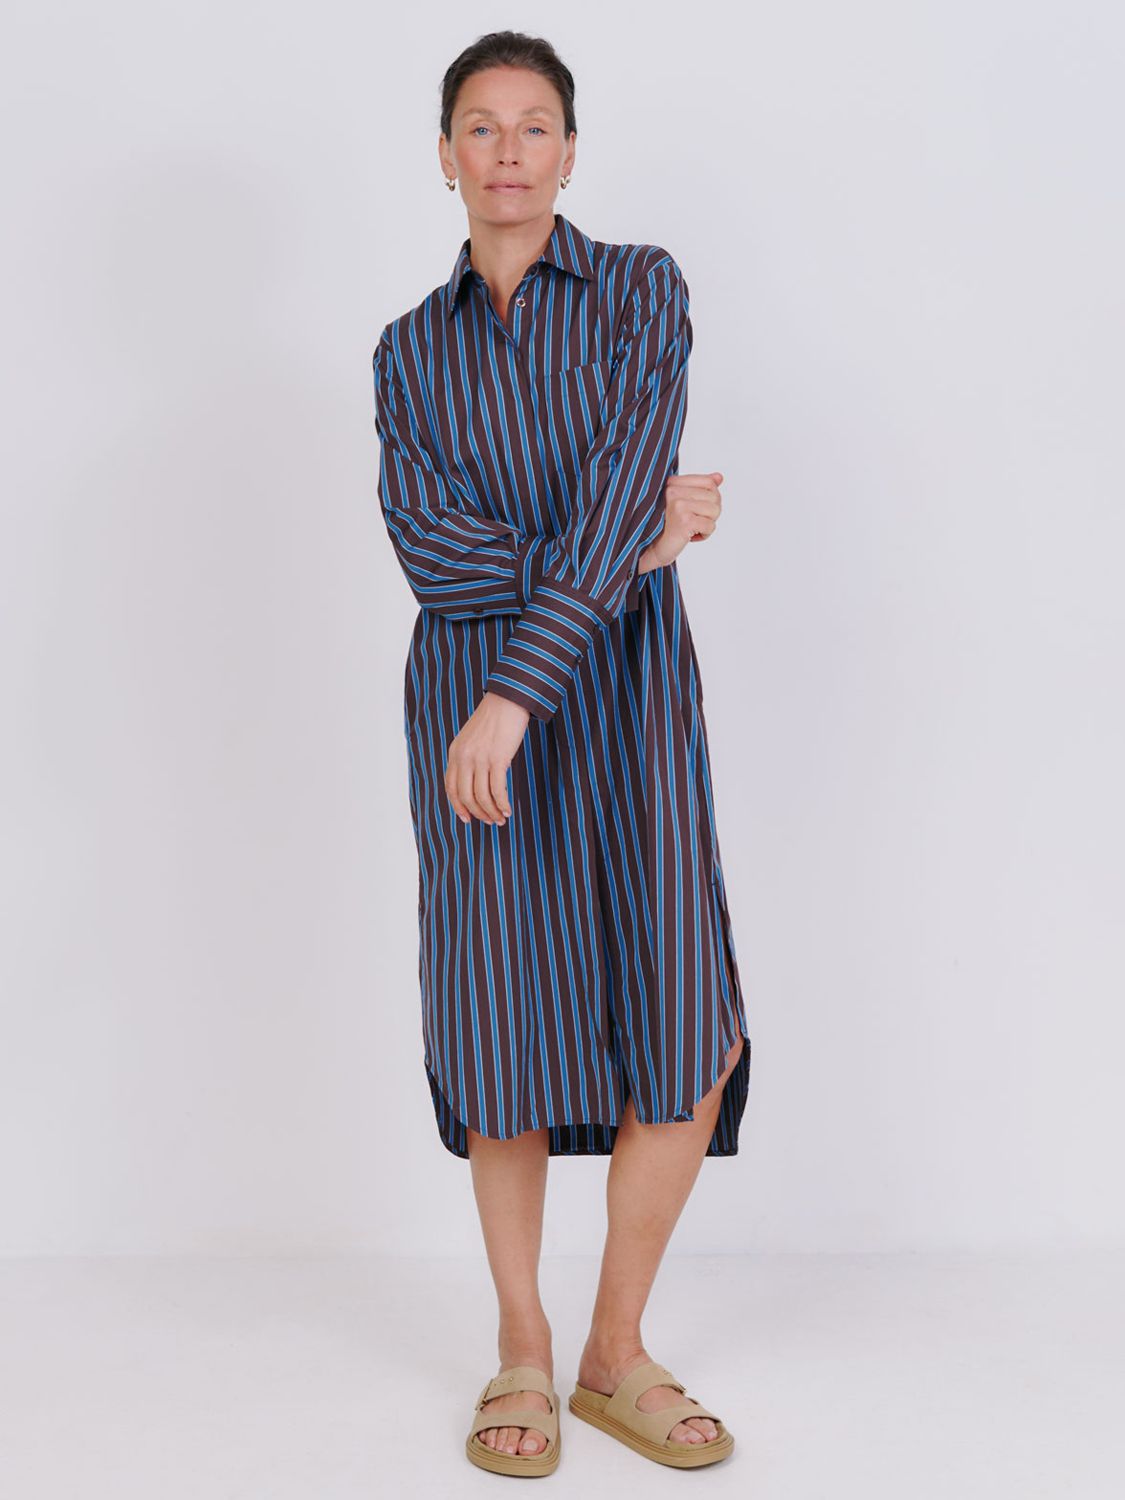 Vivere By Savannah Miller Sid Stripe Midi Shirt Dress, Blue/Brown, 16